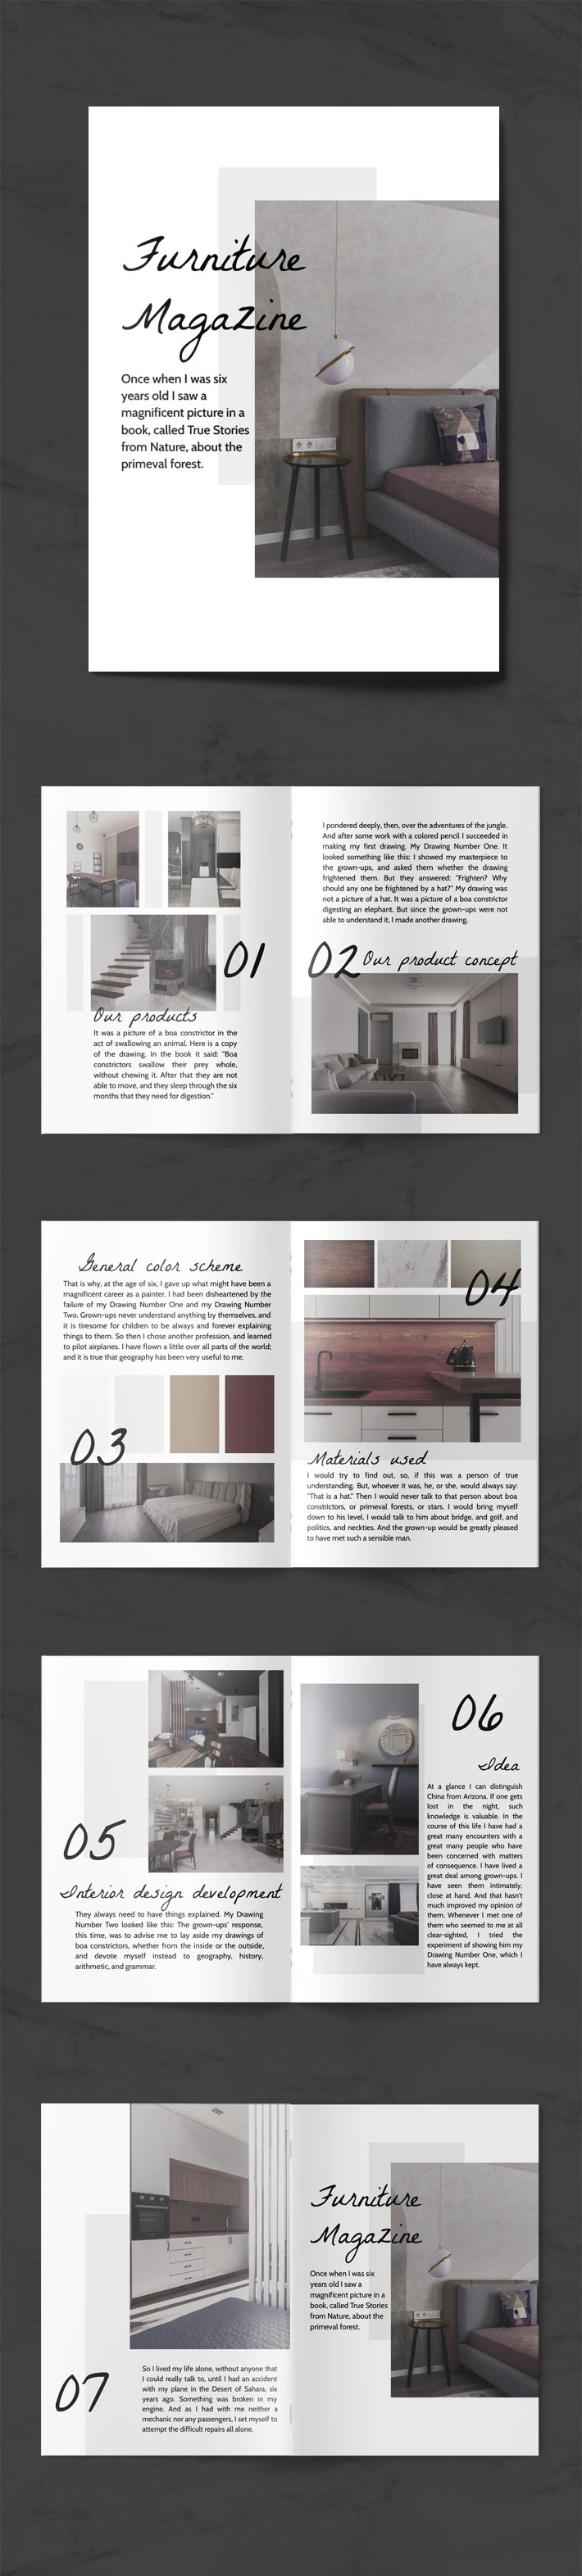 Furniture Magazine - free Google Docs Template - 10061902